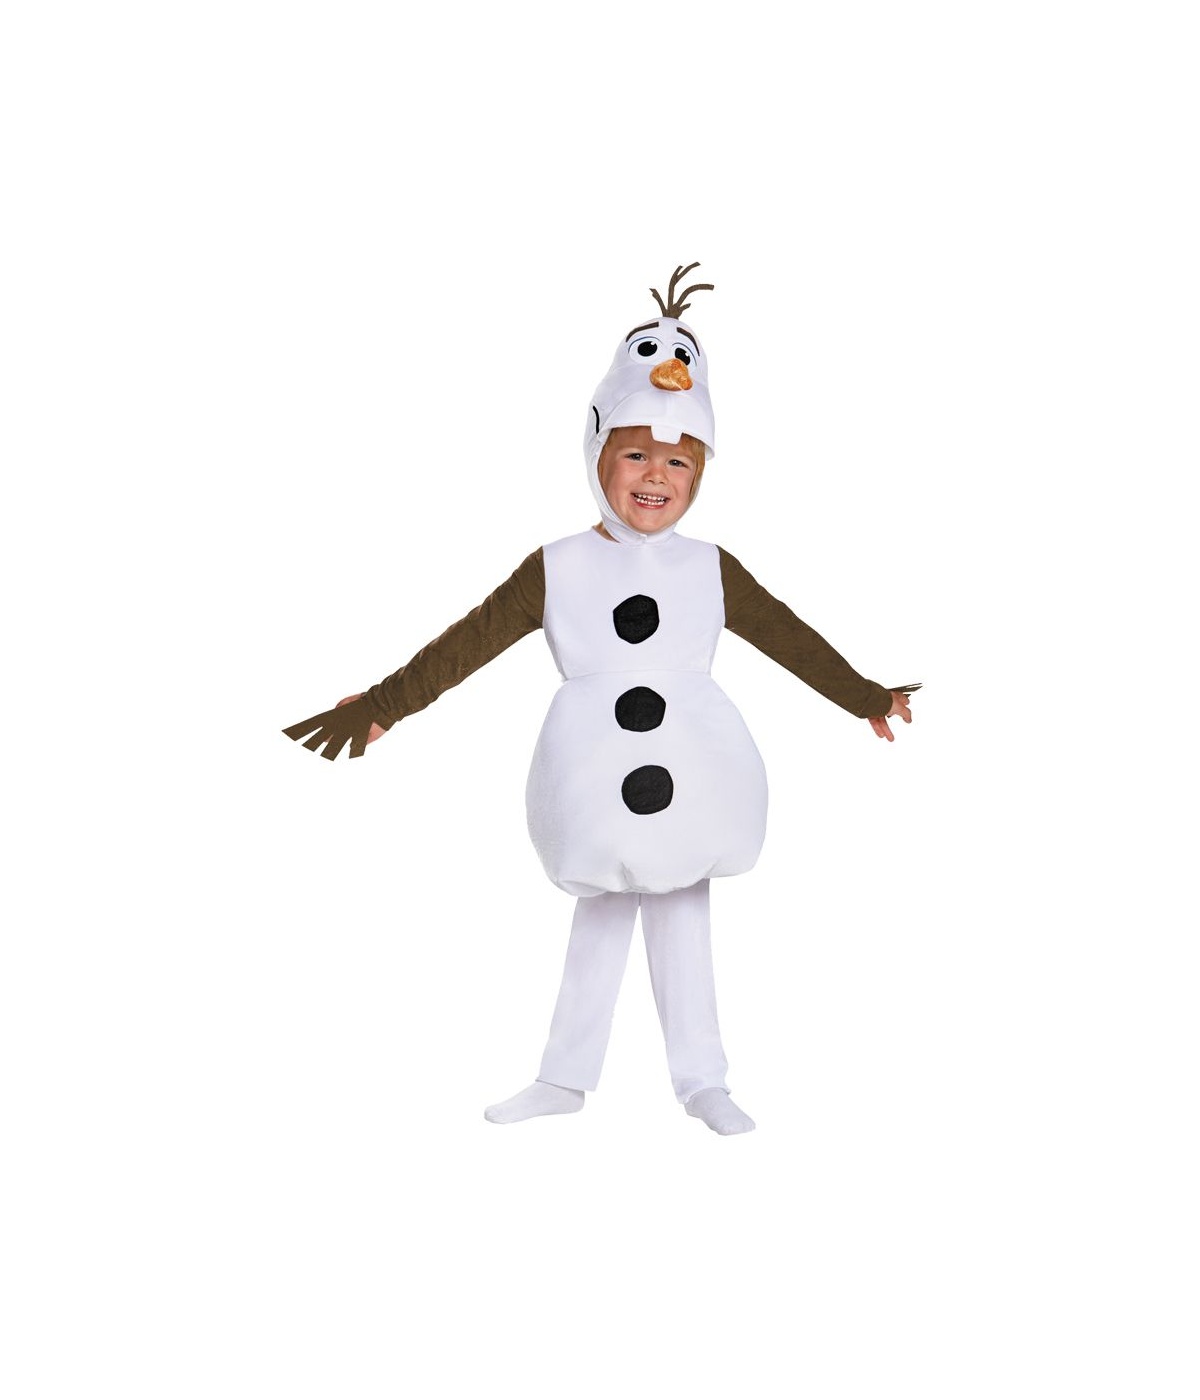  Boys Frozen Olaf Costume